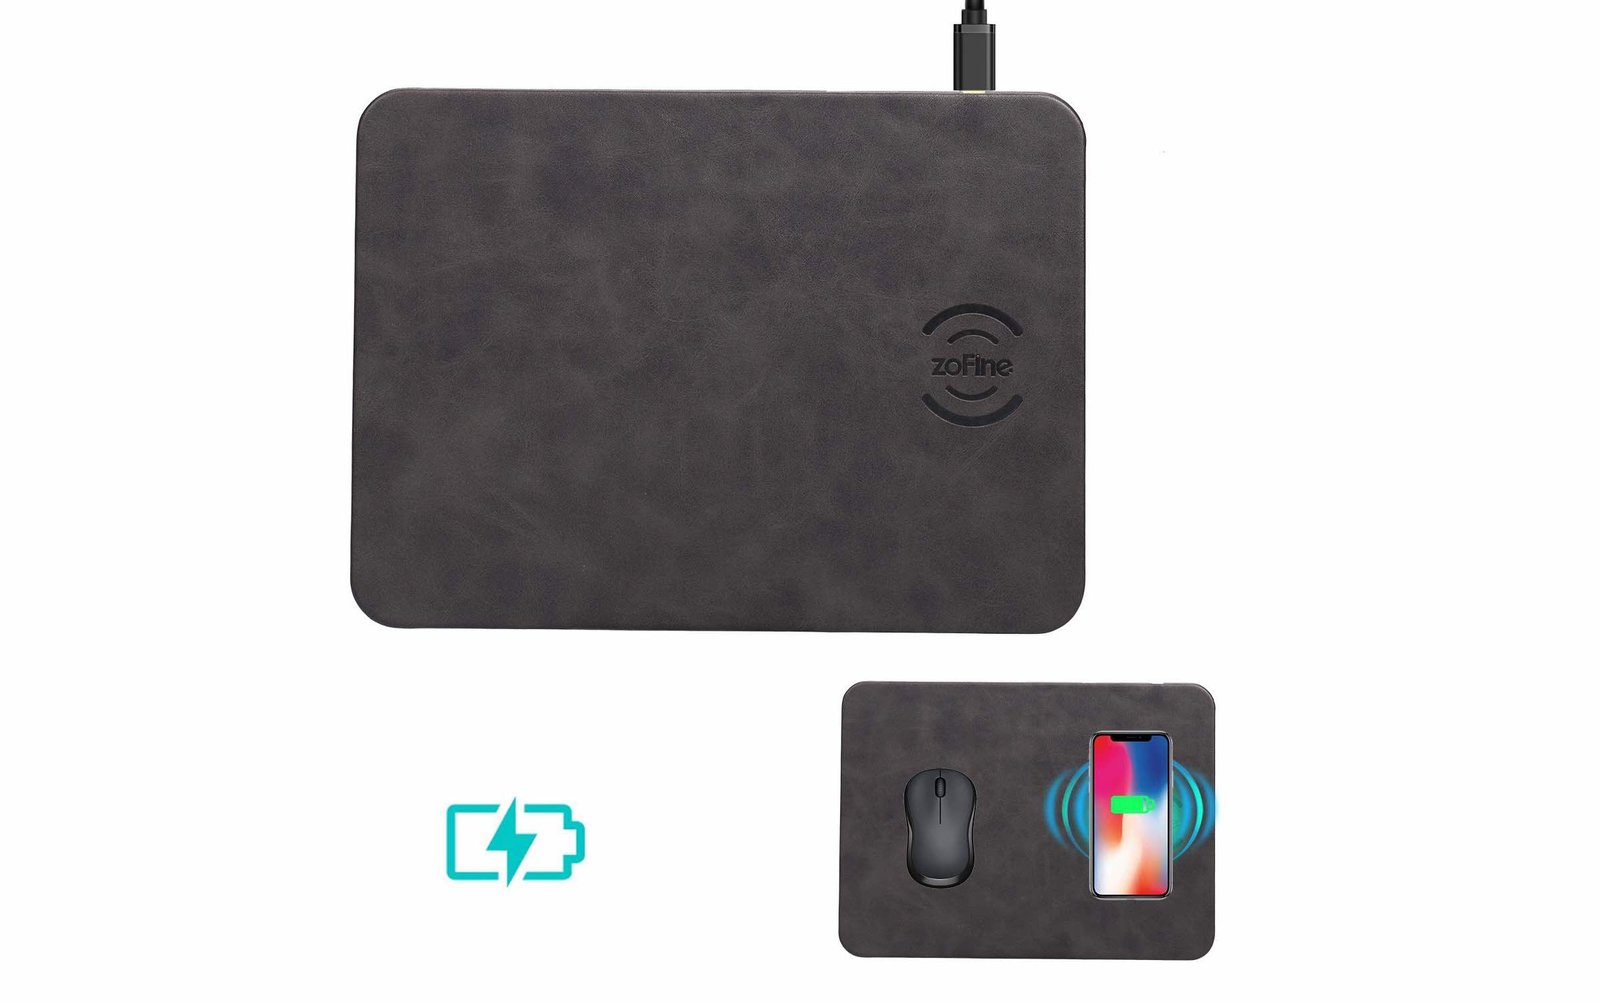 ZOFINE Wireless Charging Mouse Pad -min (1)